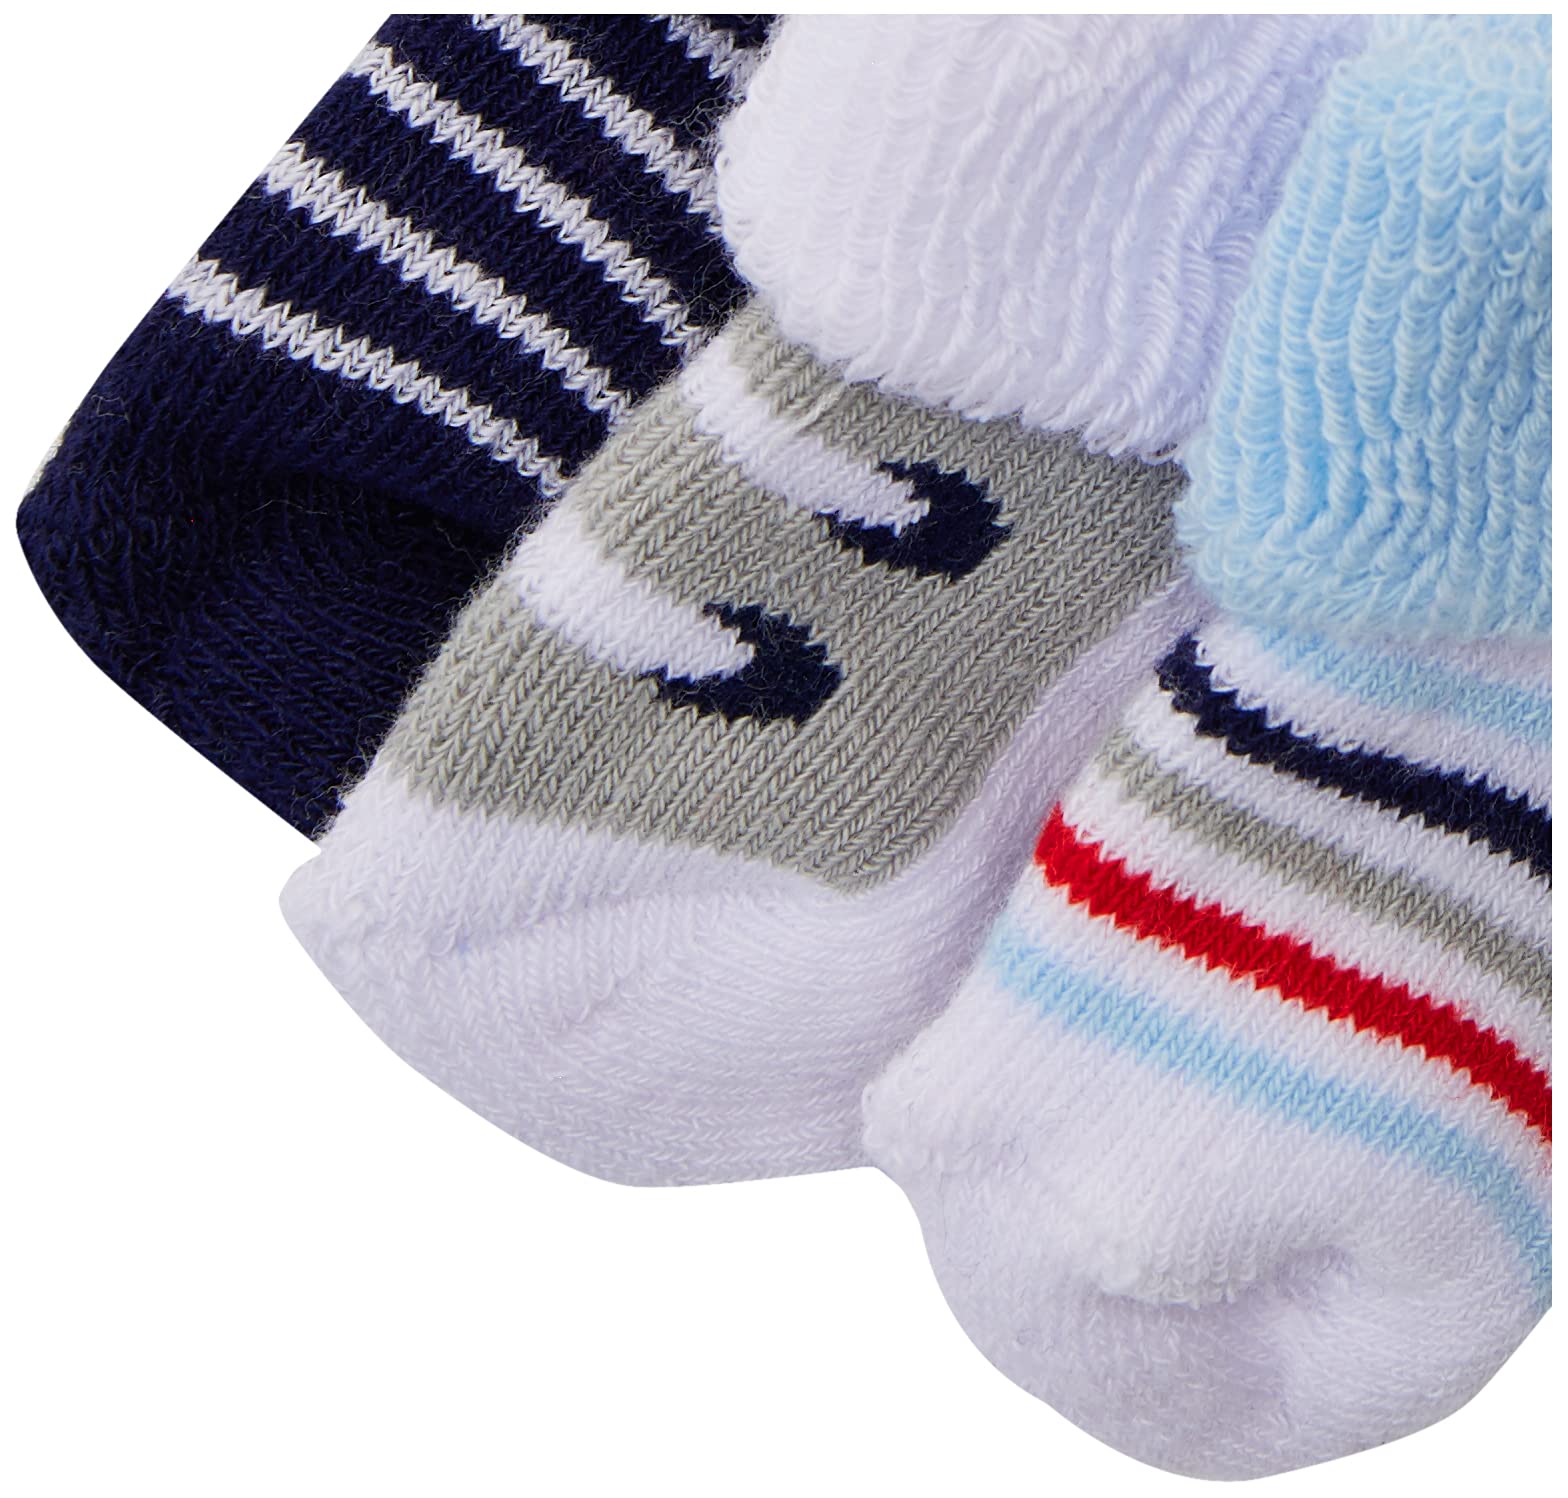 Luvable Friends Unisex Baby Newborn and Baby Socks Set